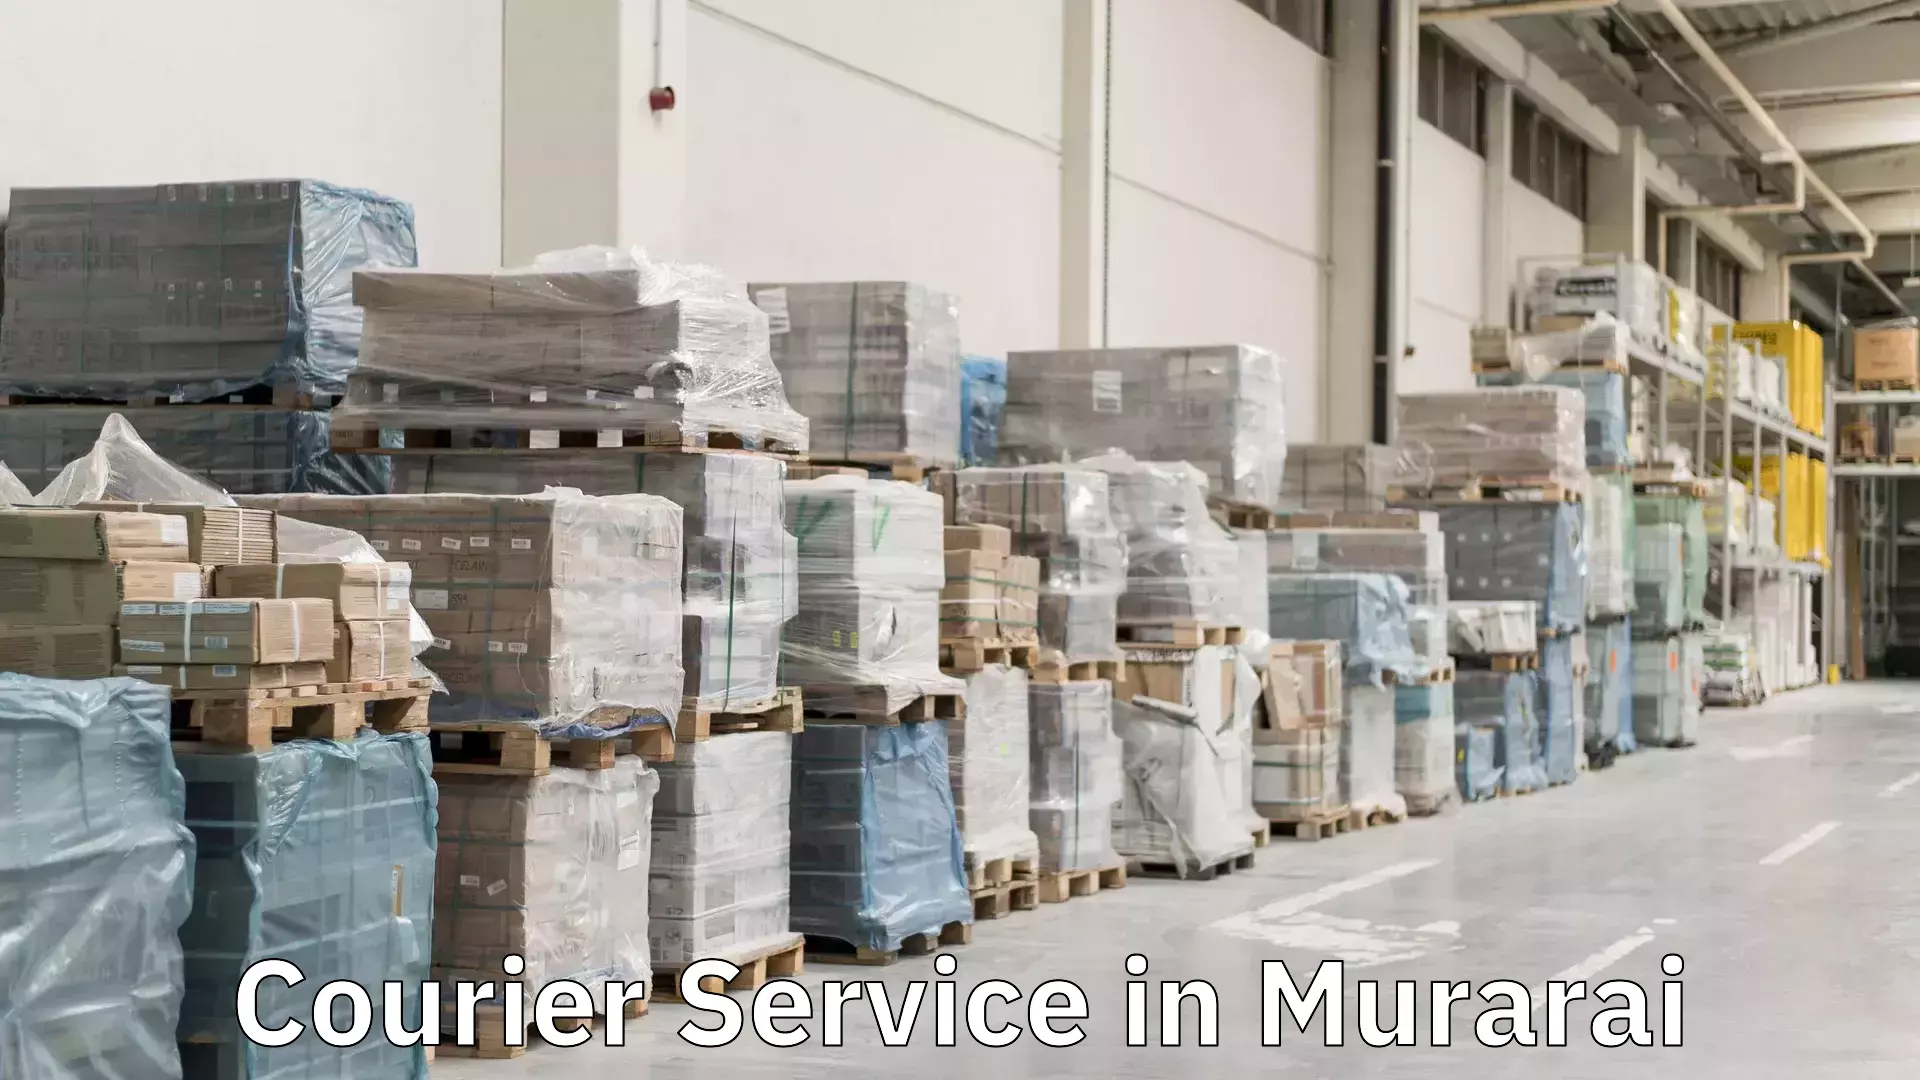 Modern delivery methods in Murarai